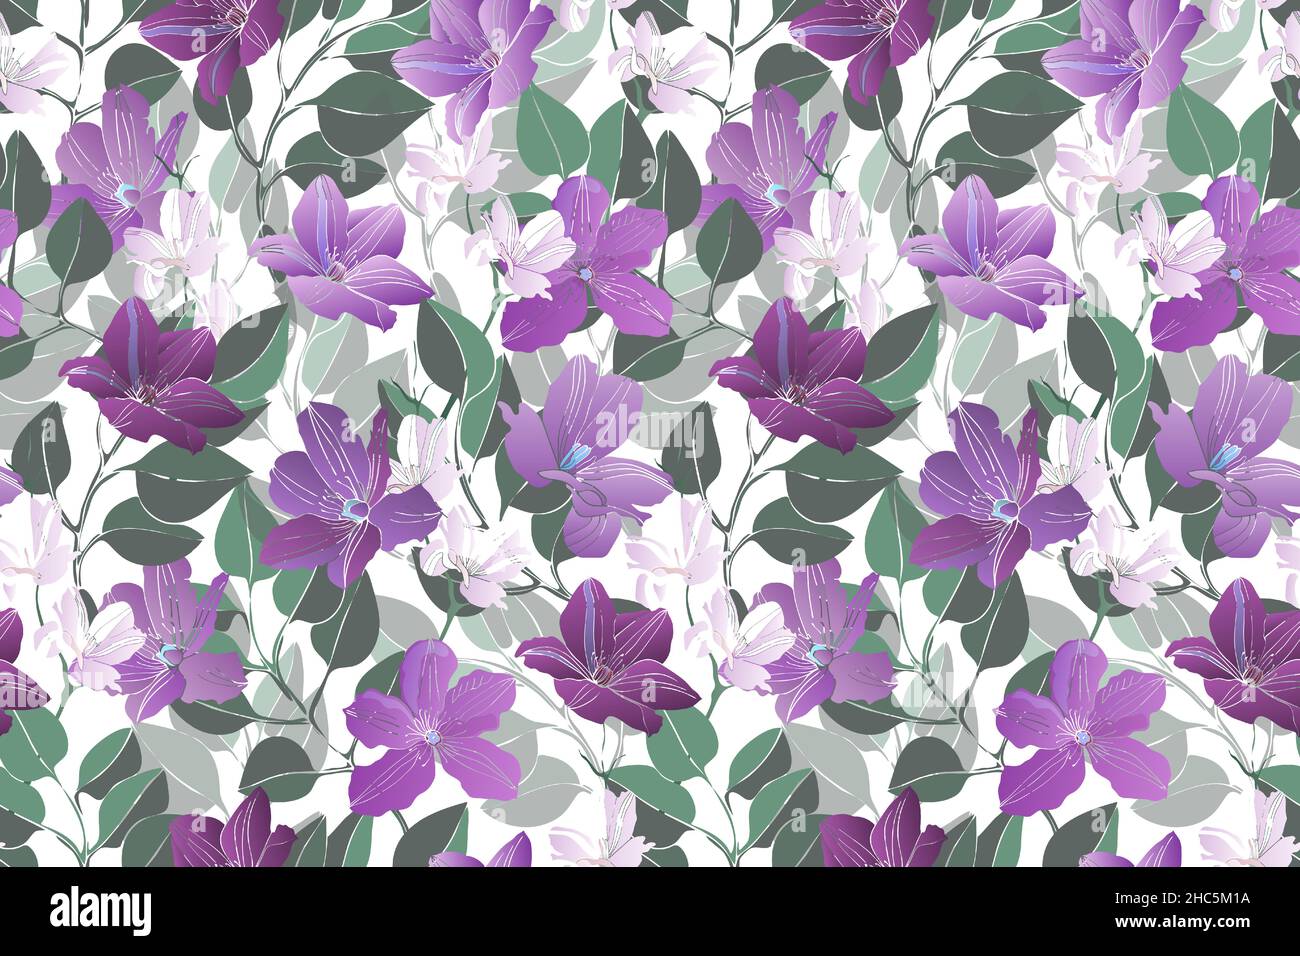 Art floral vector seamless pattern. Purple flowers Stock Vector